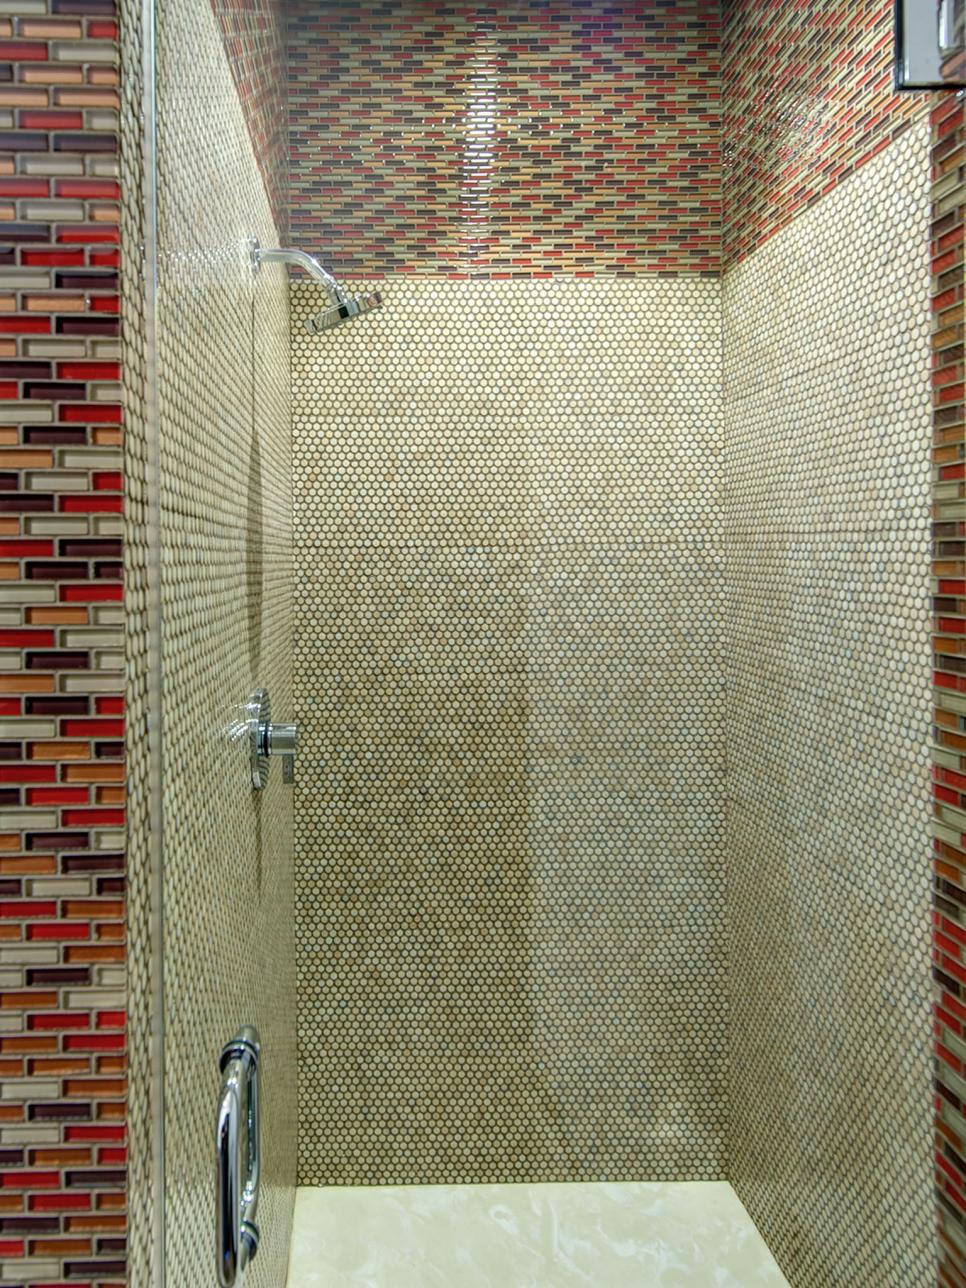 Mixed Tile Mid-Century Modern Bathroom 